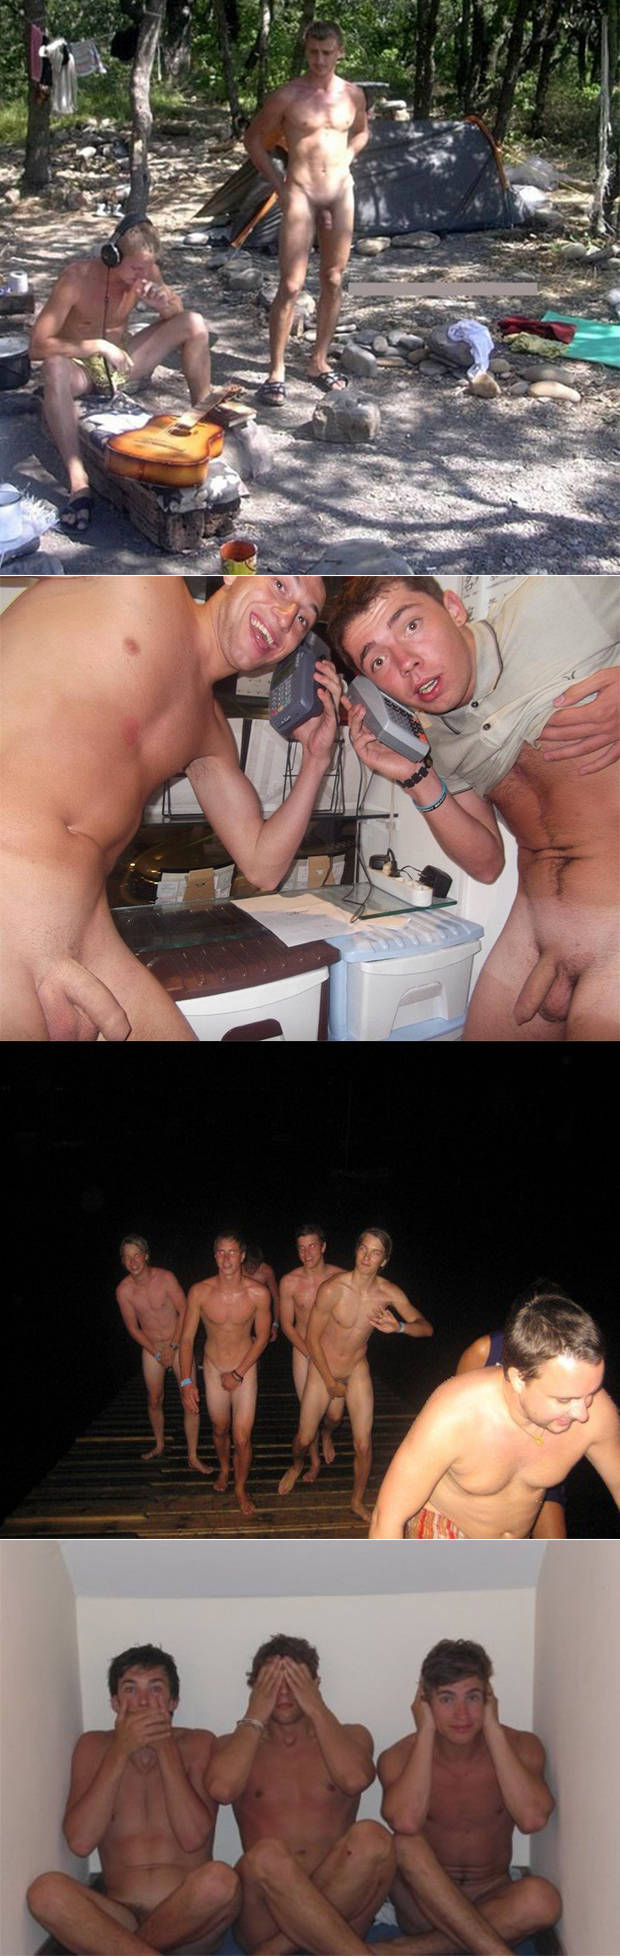 naked amateur men pics hd pic